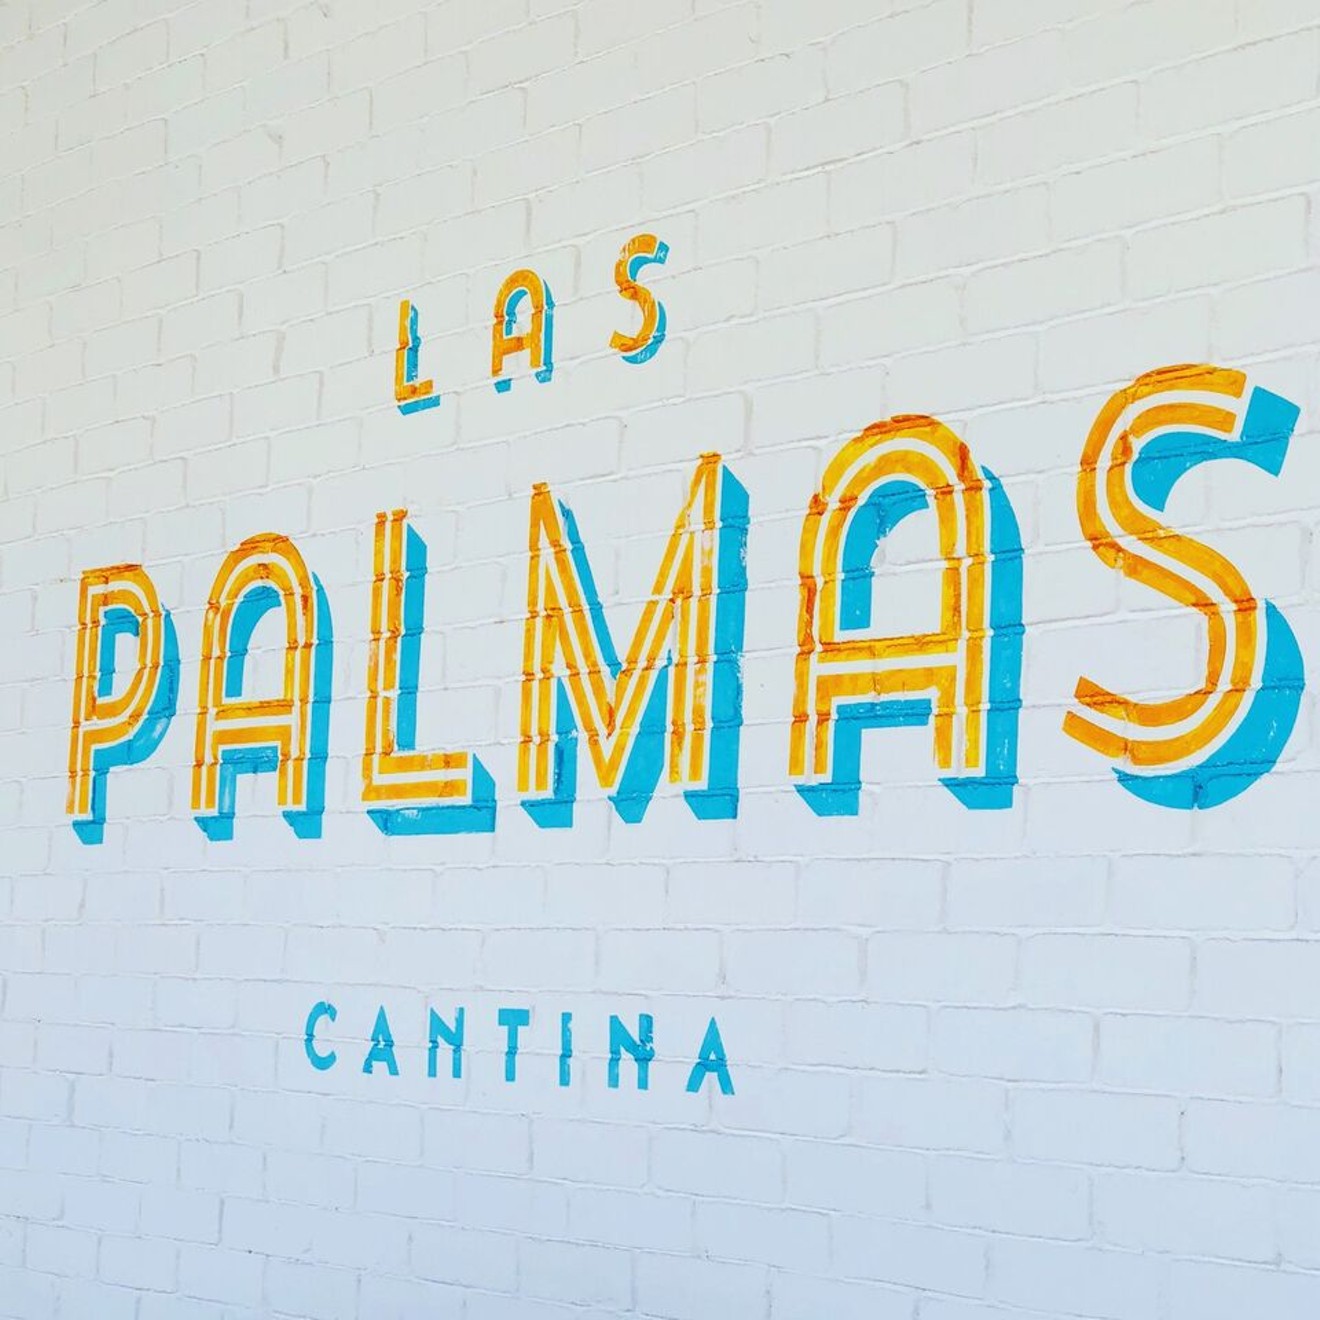 Las Palmas Cantina, a beach-style Mexican restaurant, will open next week.